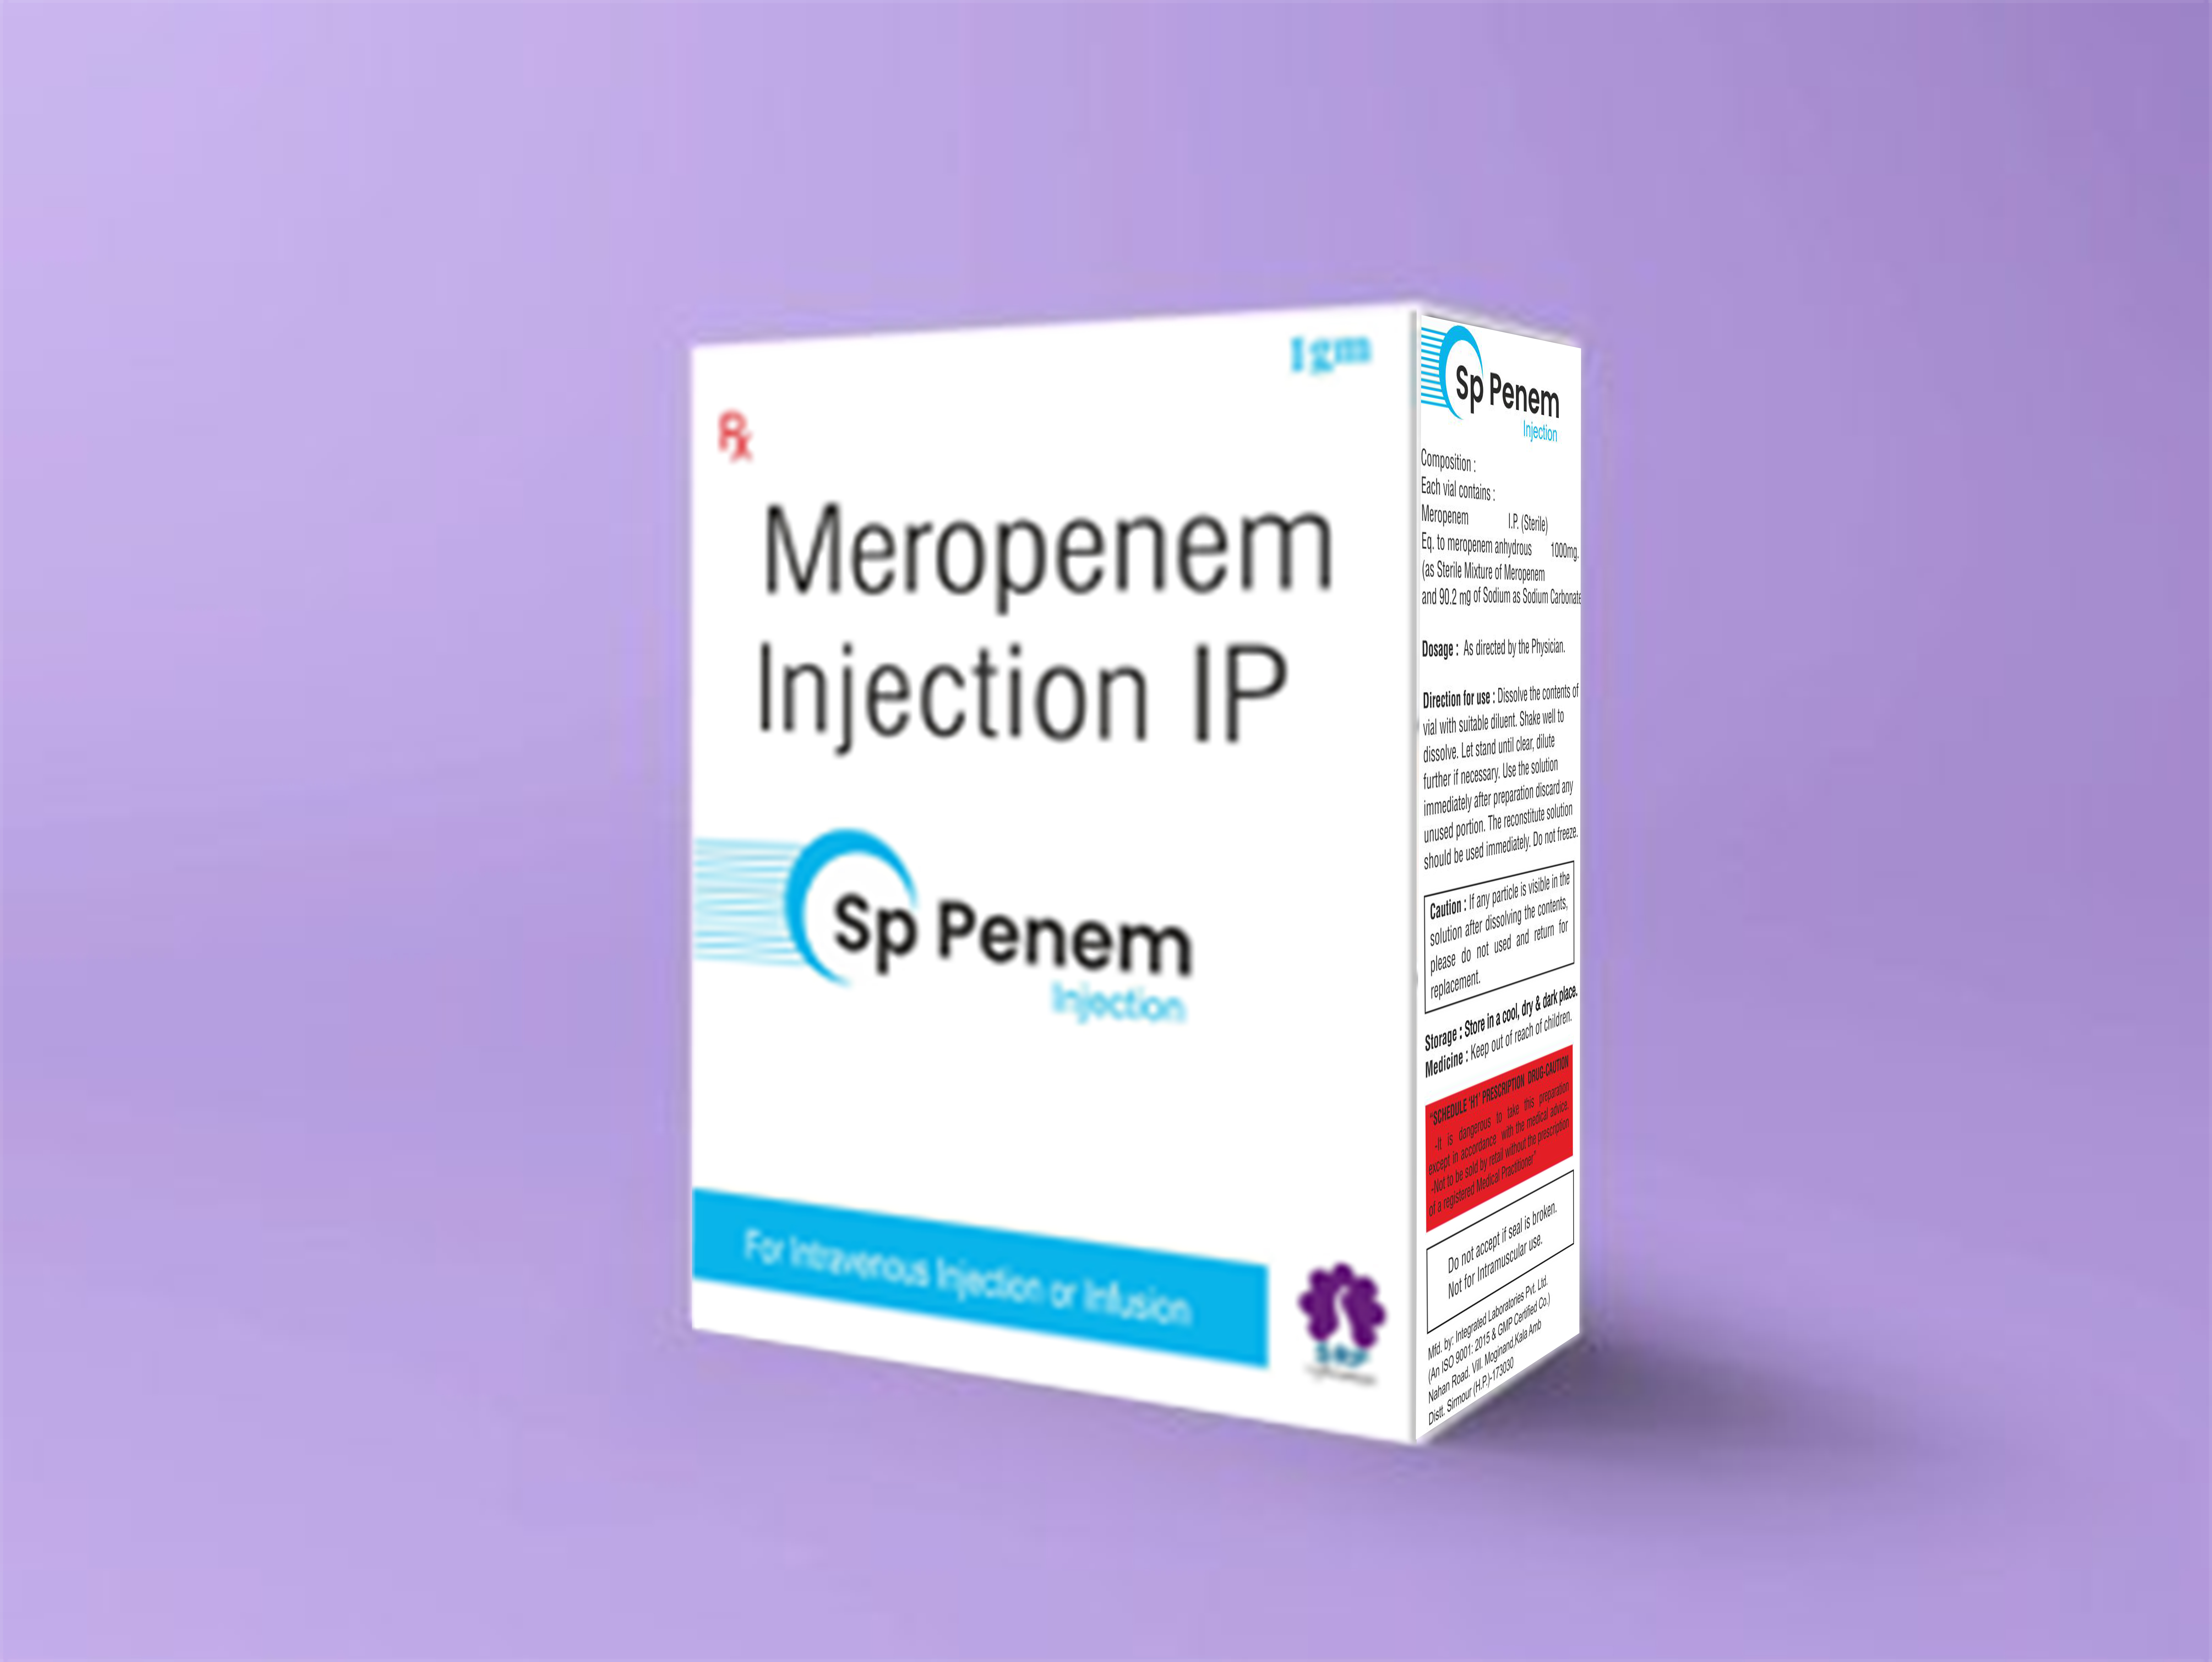 Product Name: SP PENEM, Compositions of SP PENEM are Meropenem Injection IP - Cynak Healthcare